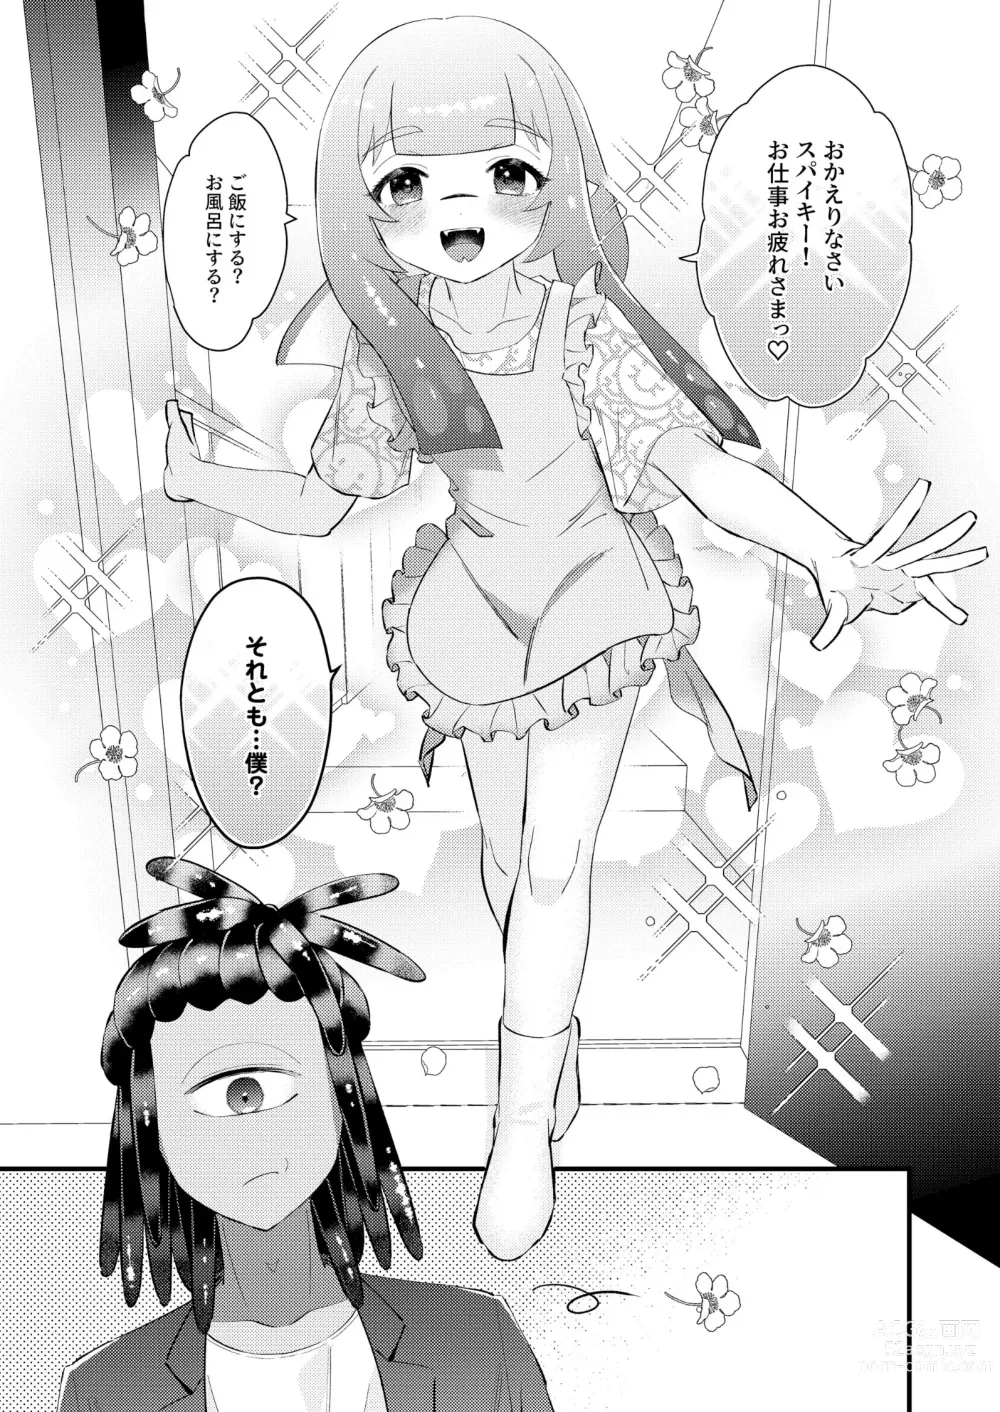 Page 4 of doujinshi Uketomete Hoshii no My Darling! - I want you to accept me my darling!